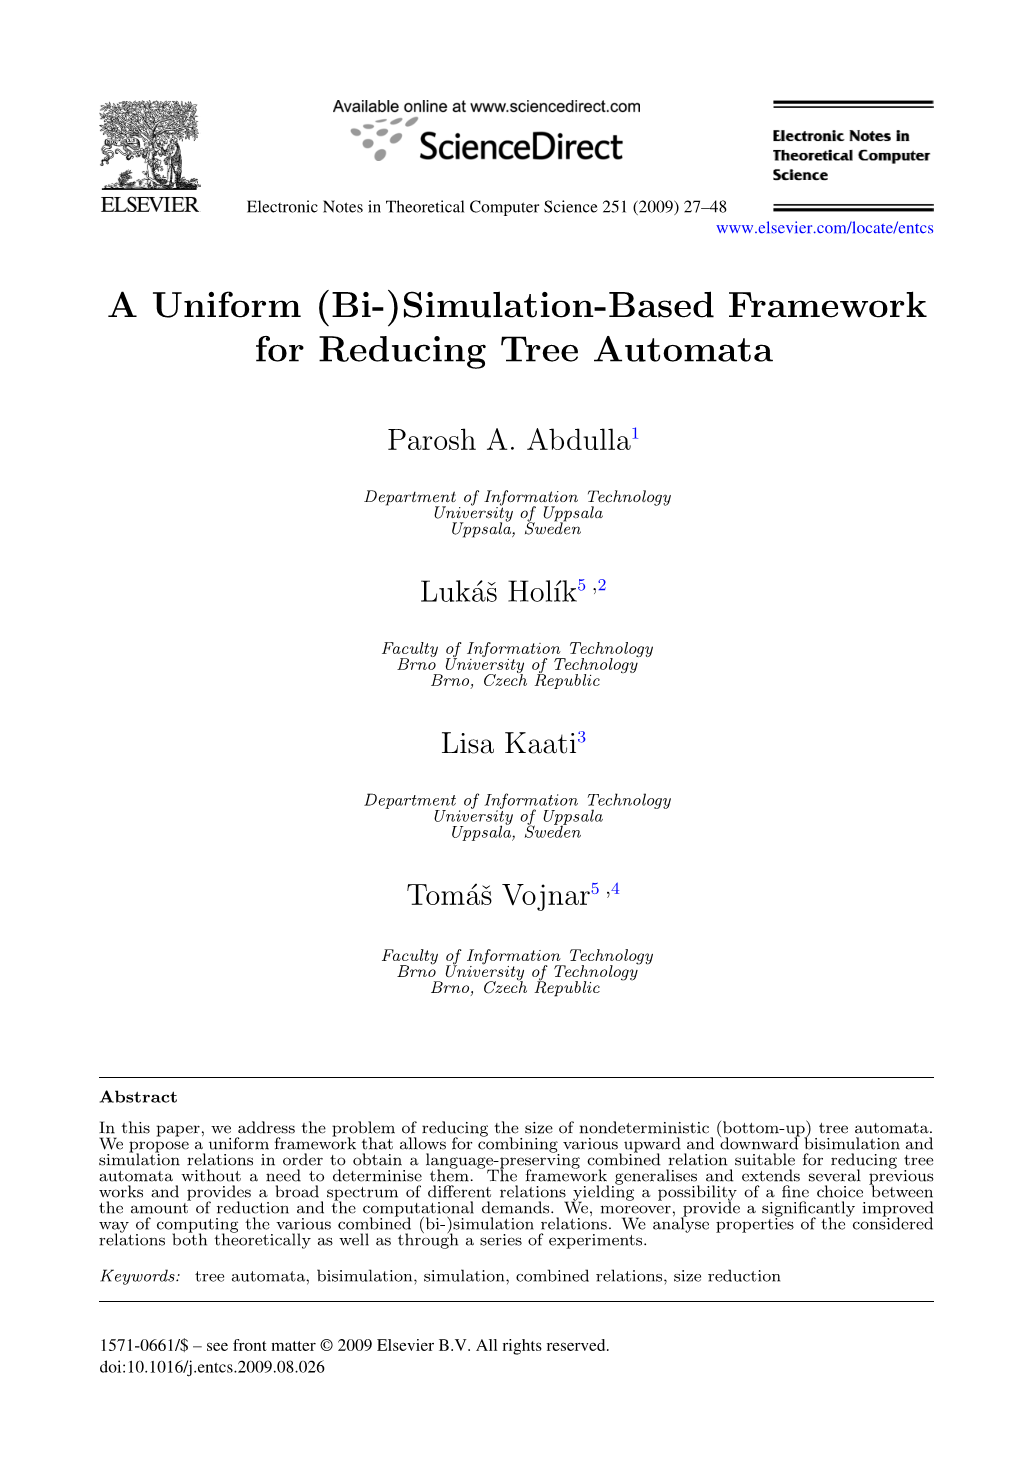 A Uniform (Bi-)Simulation-Based Framework for Reducing Tree Automata